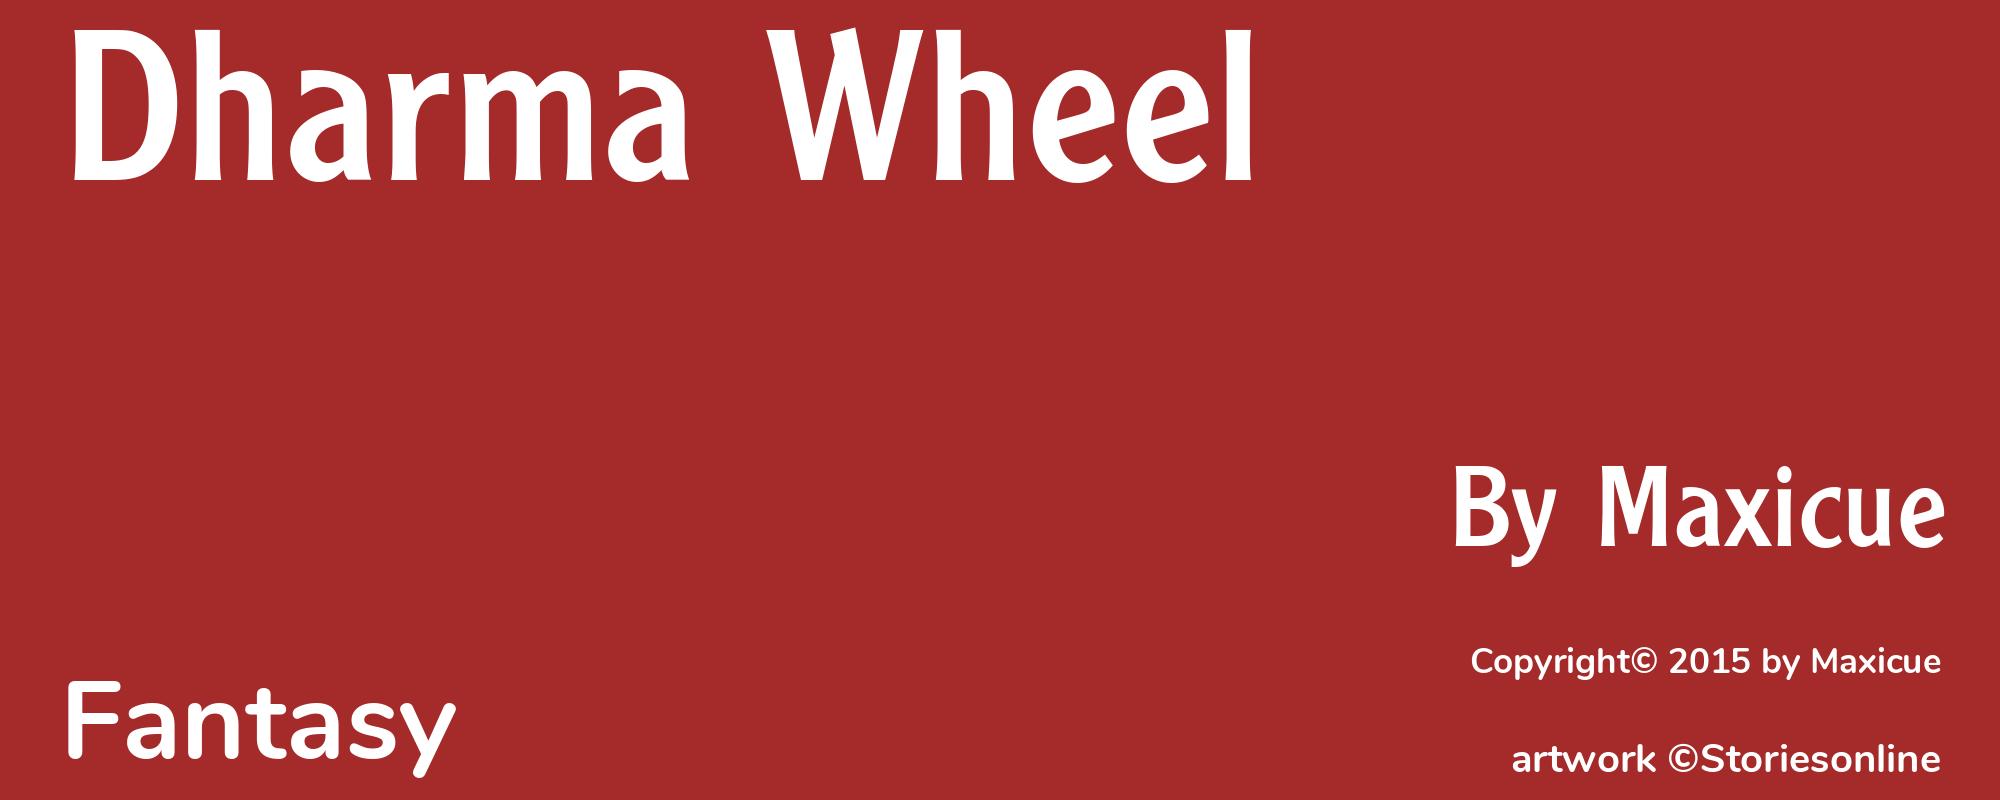 Dharma Wheel - Cover